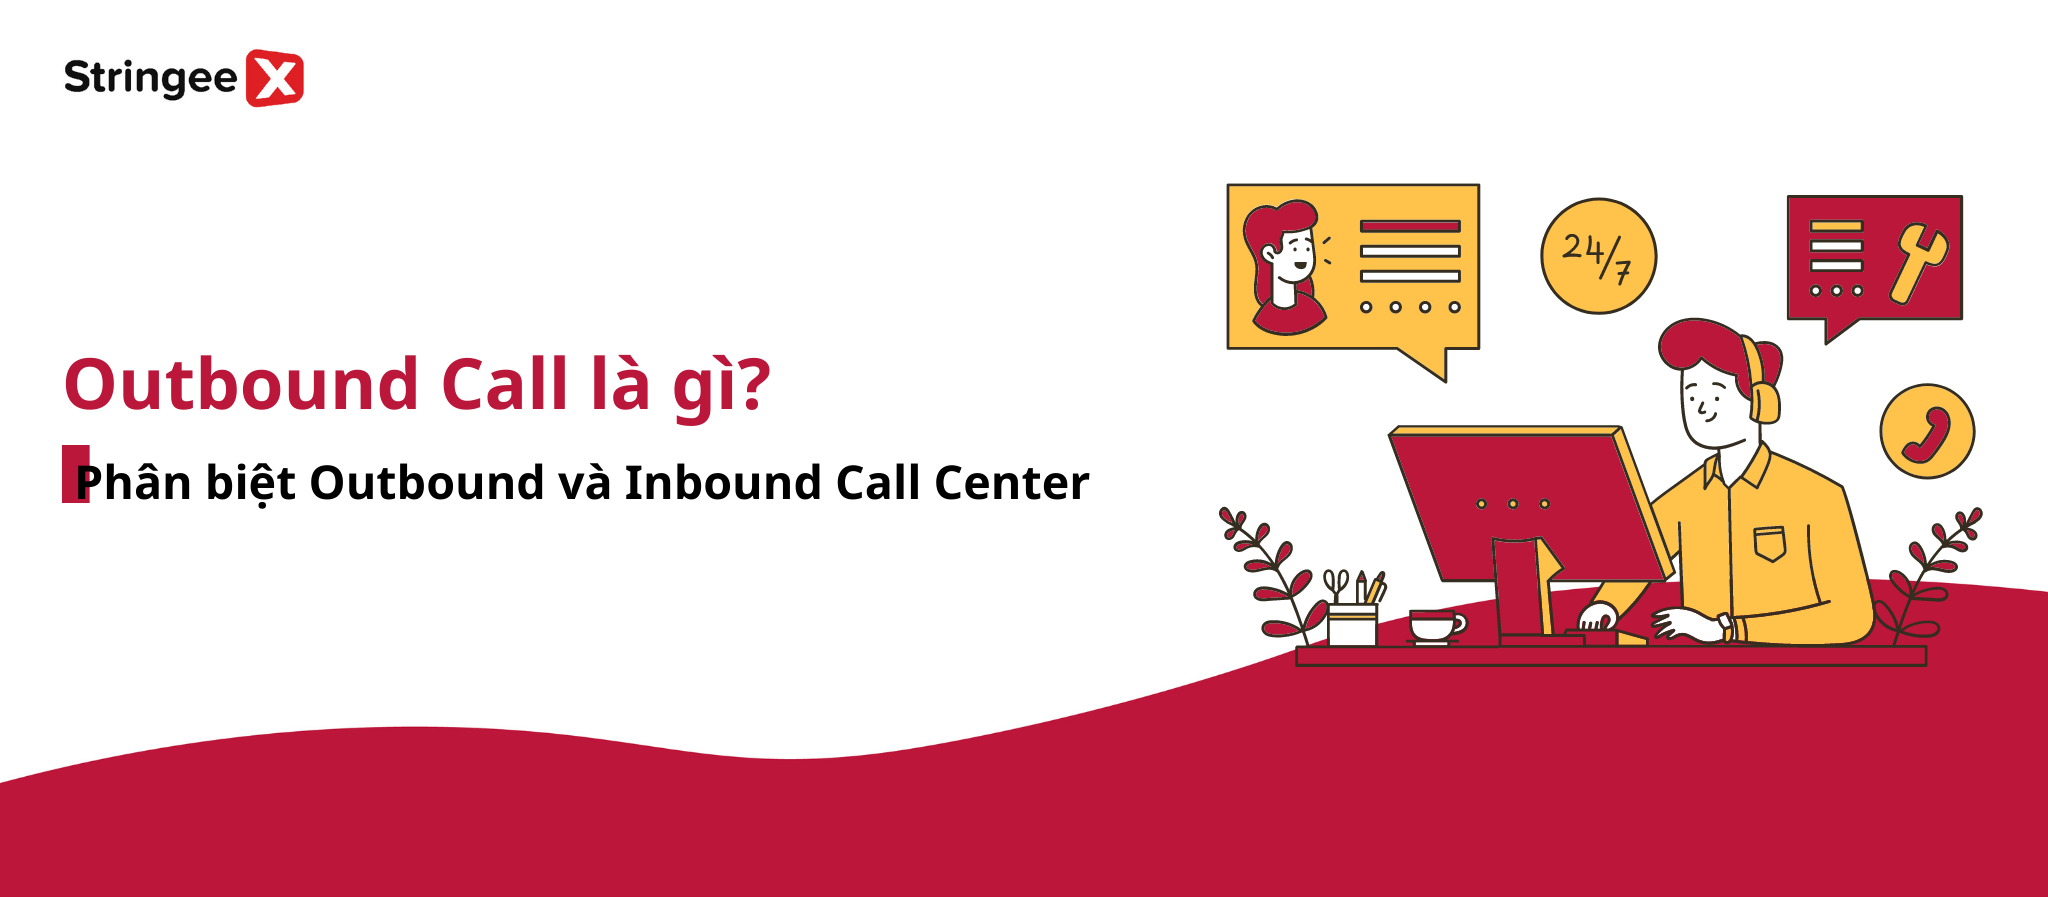 Outbound Call Center là gì? Phân biệt Outbound và Inbound Call Center